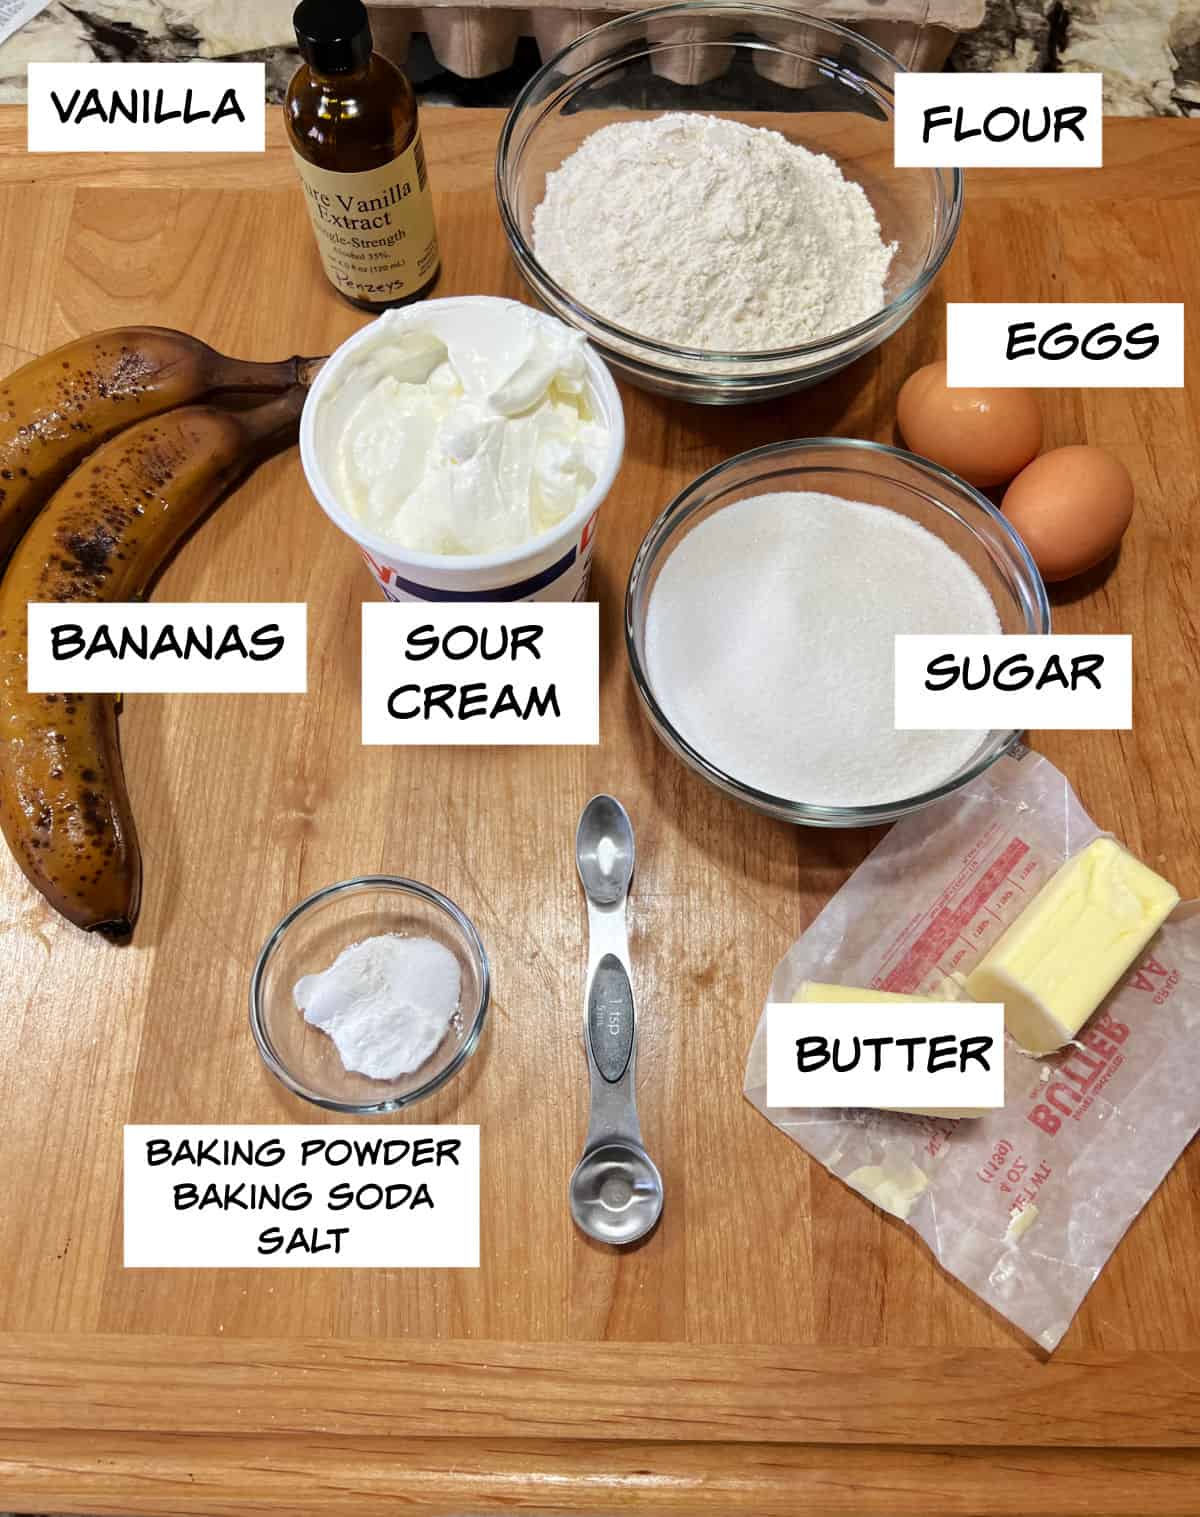 ingredients: vanilla, flour, eggs, sugar, sour cream, bananas, butter, baking powder, baking soda, and salt.